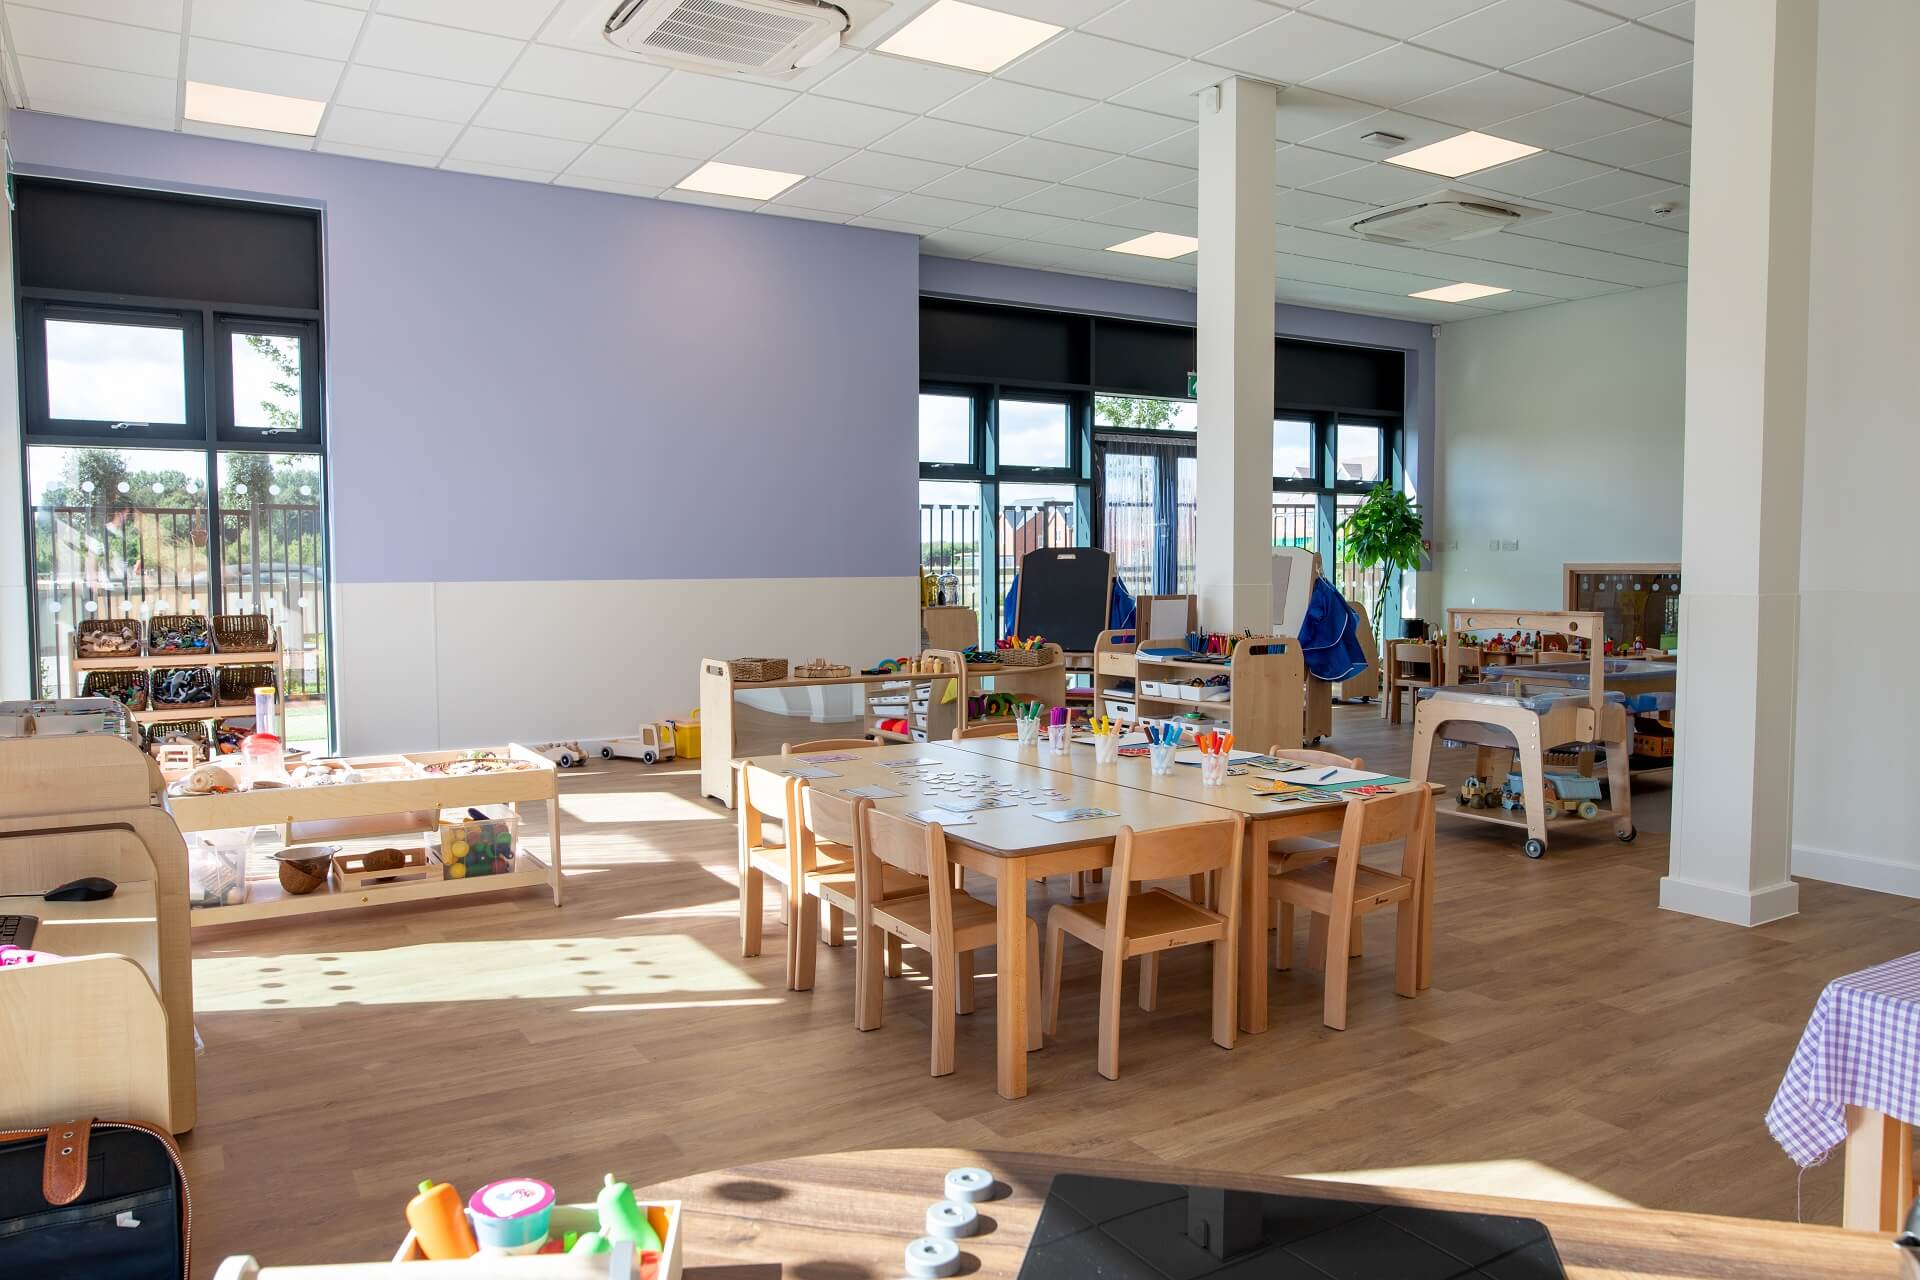 Haddenham Preschool Room 2022